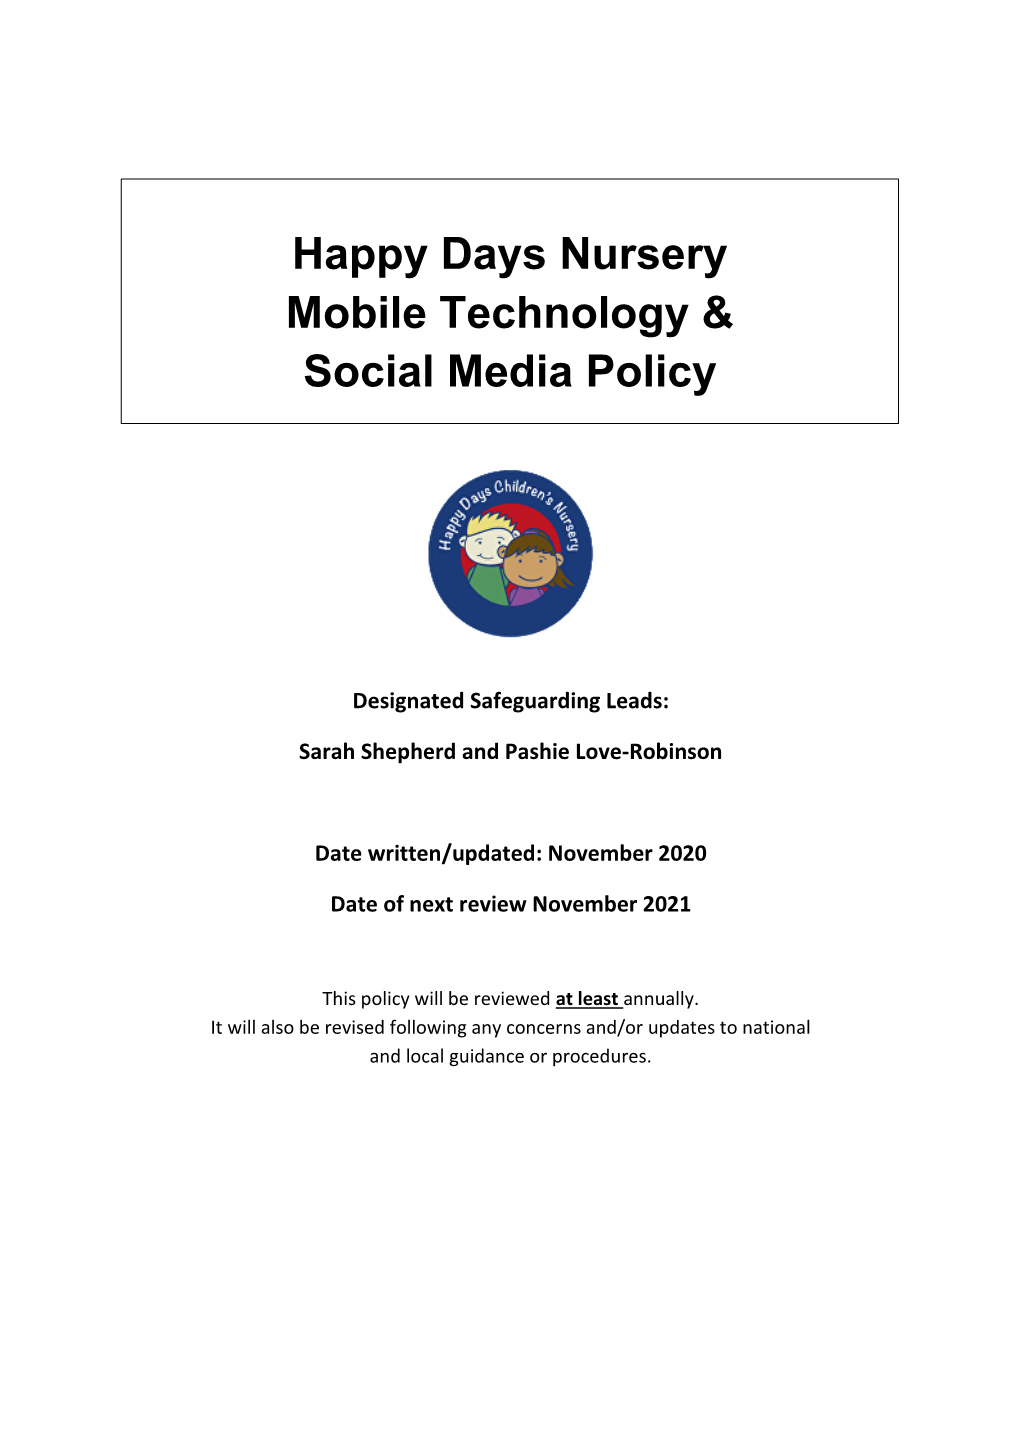 Happy Days Nursery Mobile Technology & Social Media Policy